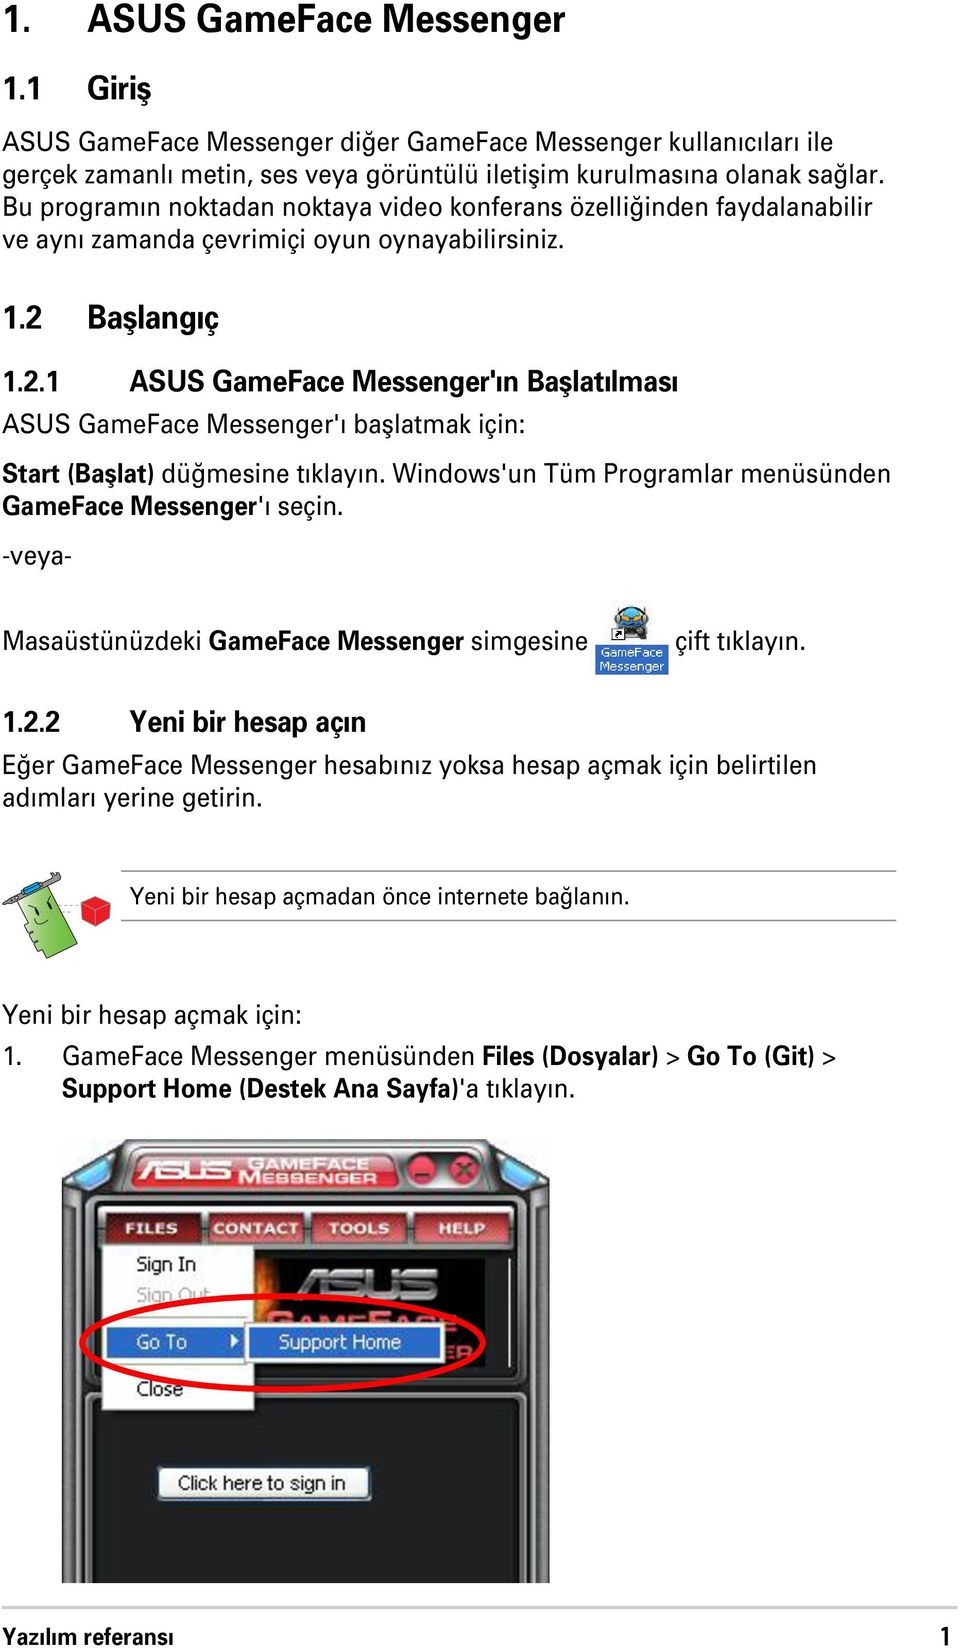 Bafllang ç 1.2.1 ASUS GameFace Messenger' n Bafllat lmas ASUS GameFace Messenger' bafllatmak için: Start (Bafllat) dü mesine t klay n. Windows'un Tüm Programlar menüsünden GameFace Messenger' seçin.